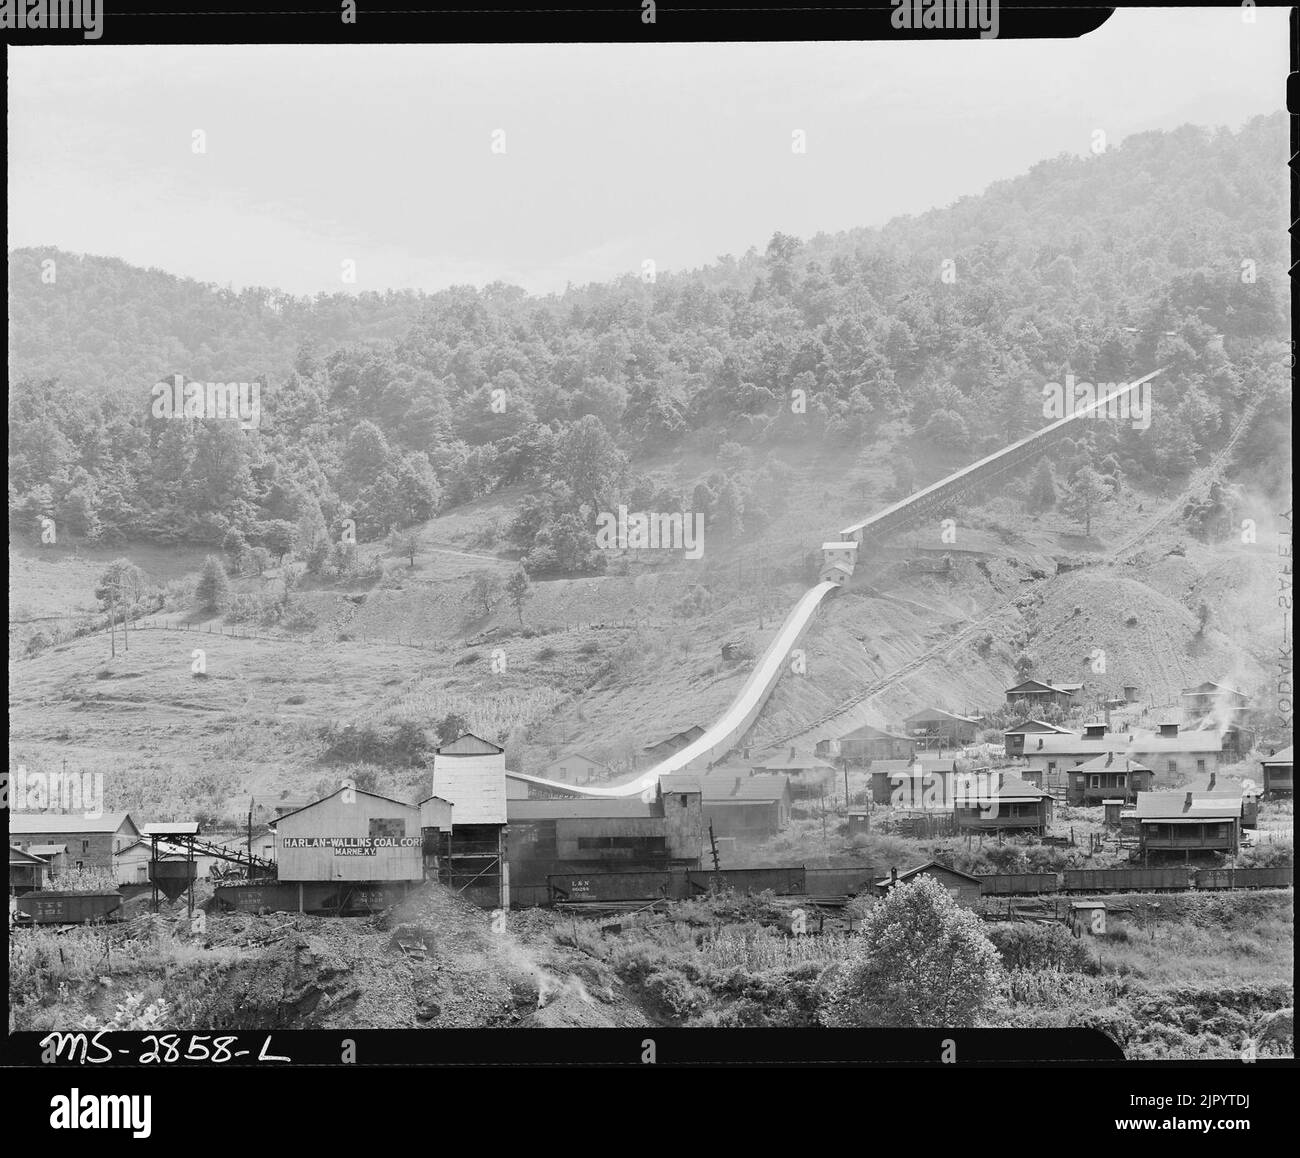 Tipple, head house and conveyor. Harlan-Wallin Coal Corporation, Marne ^1 Mine, Verda, Harlan County, Kentucky. Stock Photo